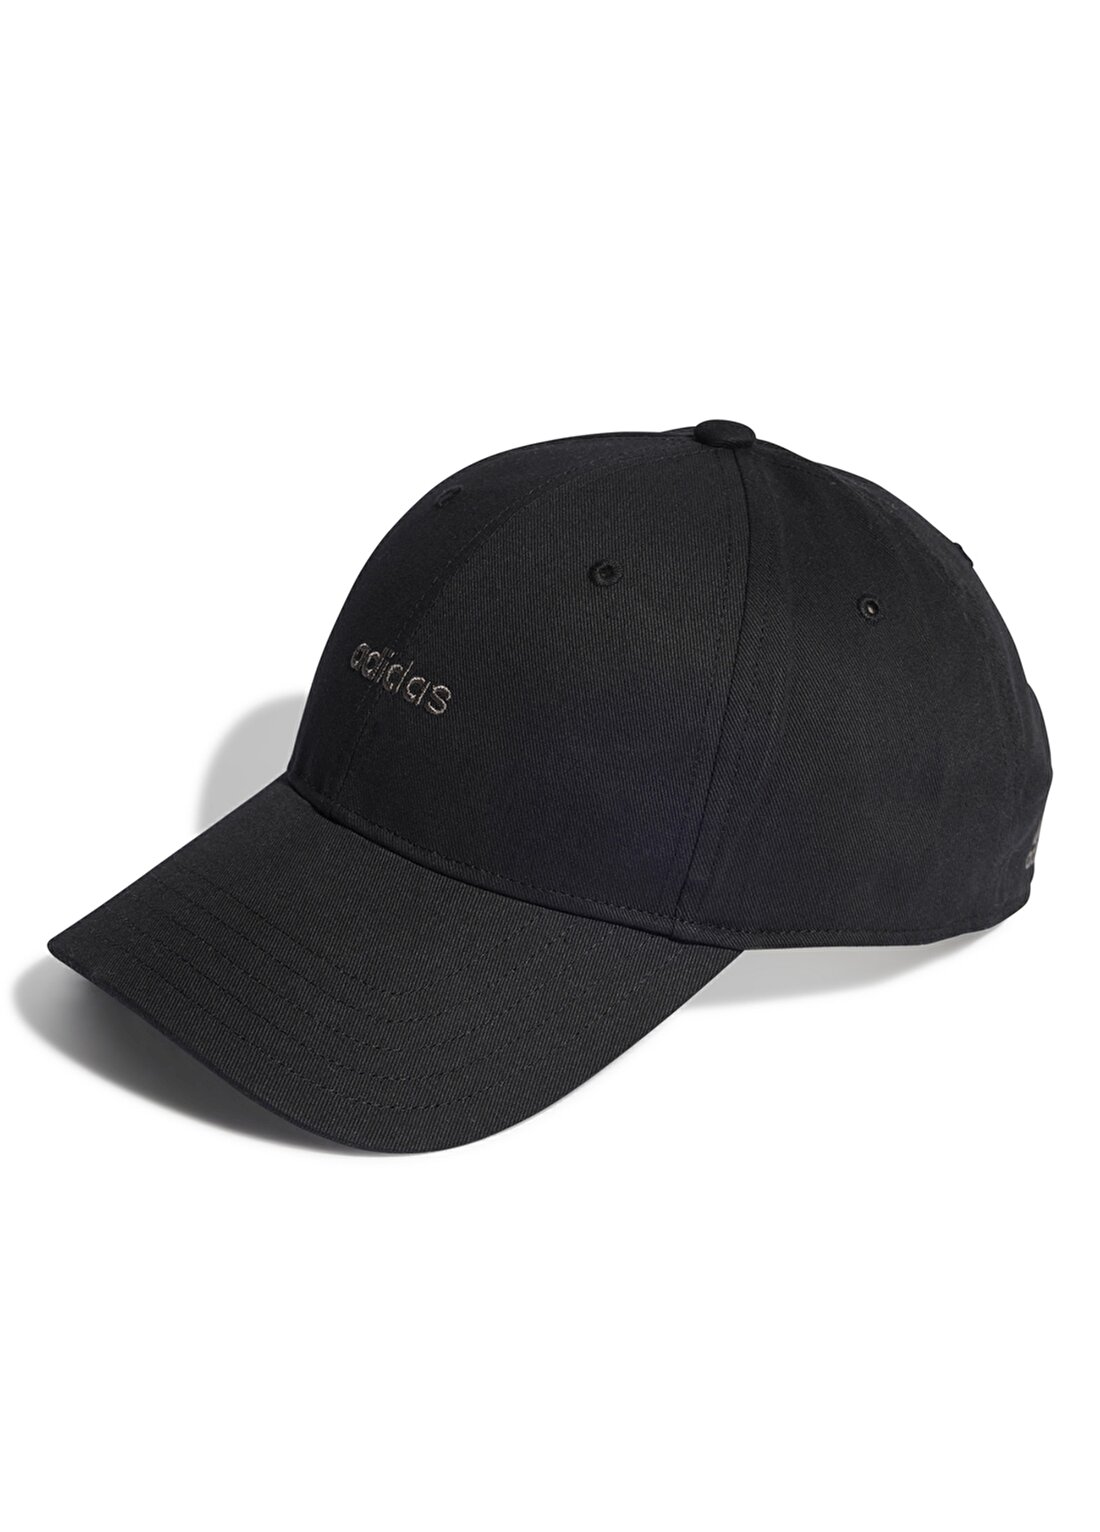 Adidas Açık Siyah Unisex Şapka IP6317 BSBL